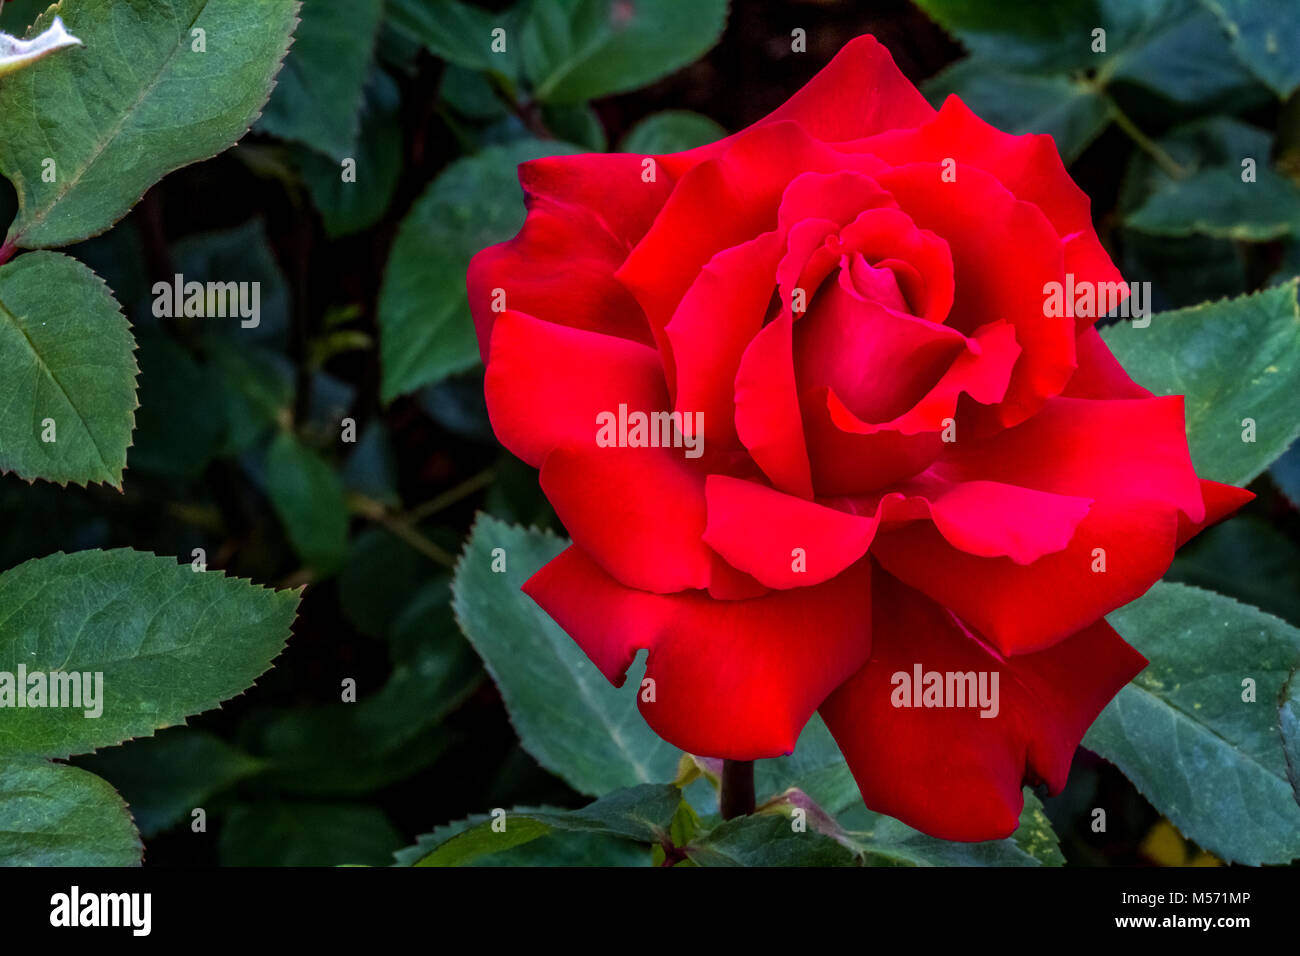 Red rose 'Rosa Claret' Stock Photo - Alamy